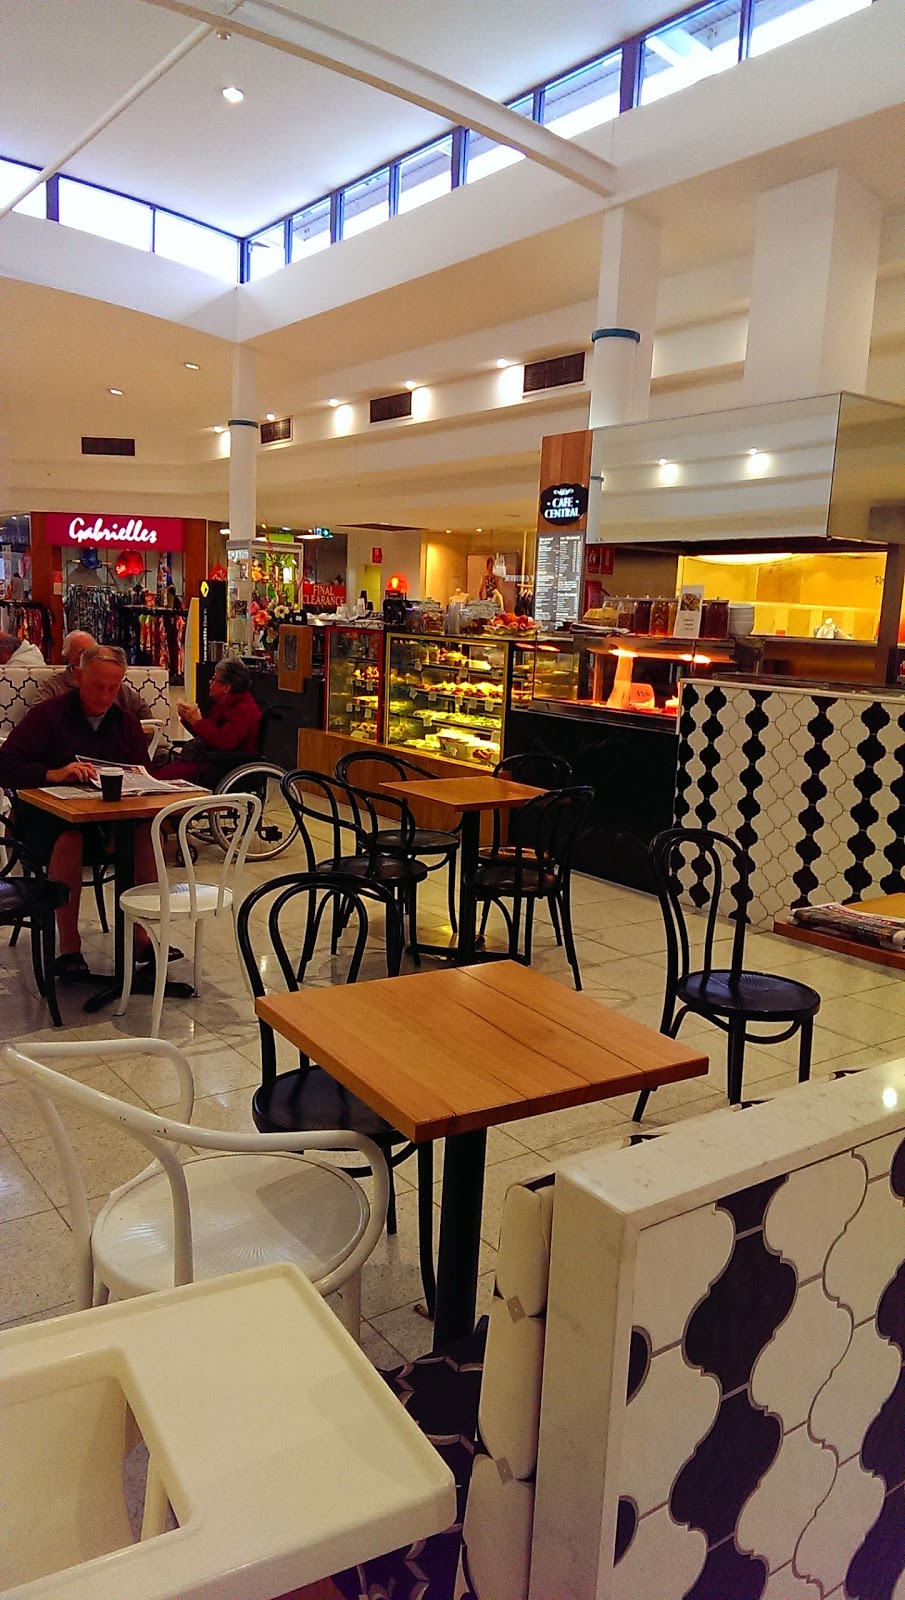 Coffee Central | Dog Swamp Shopping Centre, 6 Wanneroo Rd, Yokine WA 6060, Australia